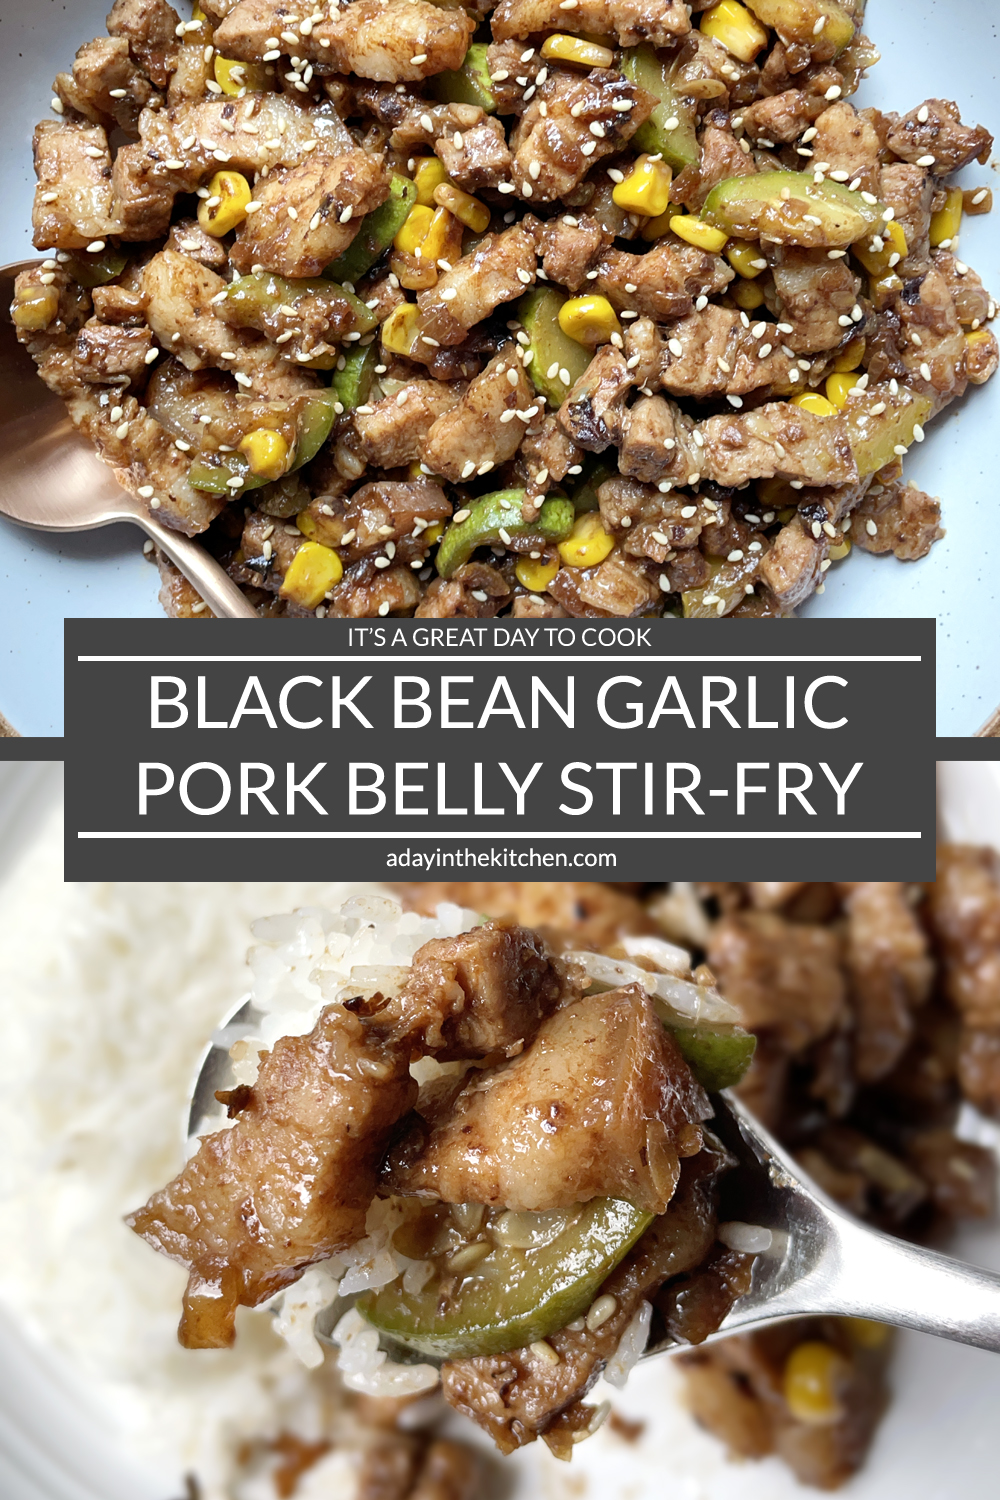 Black Bean Garlic Pork Belly Stir-fry